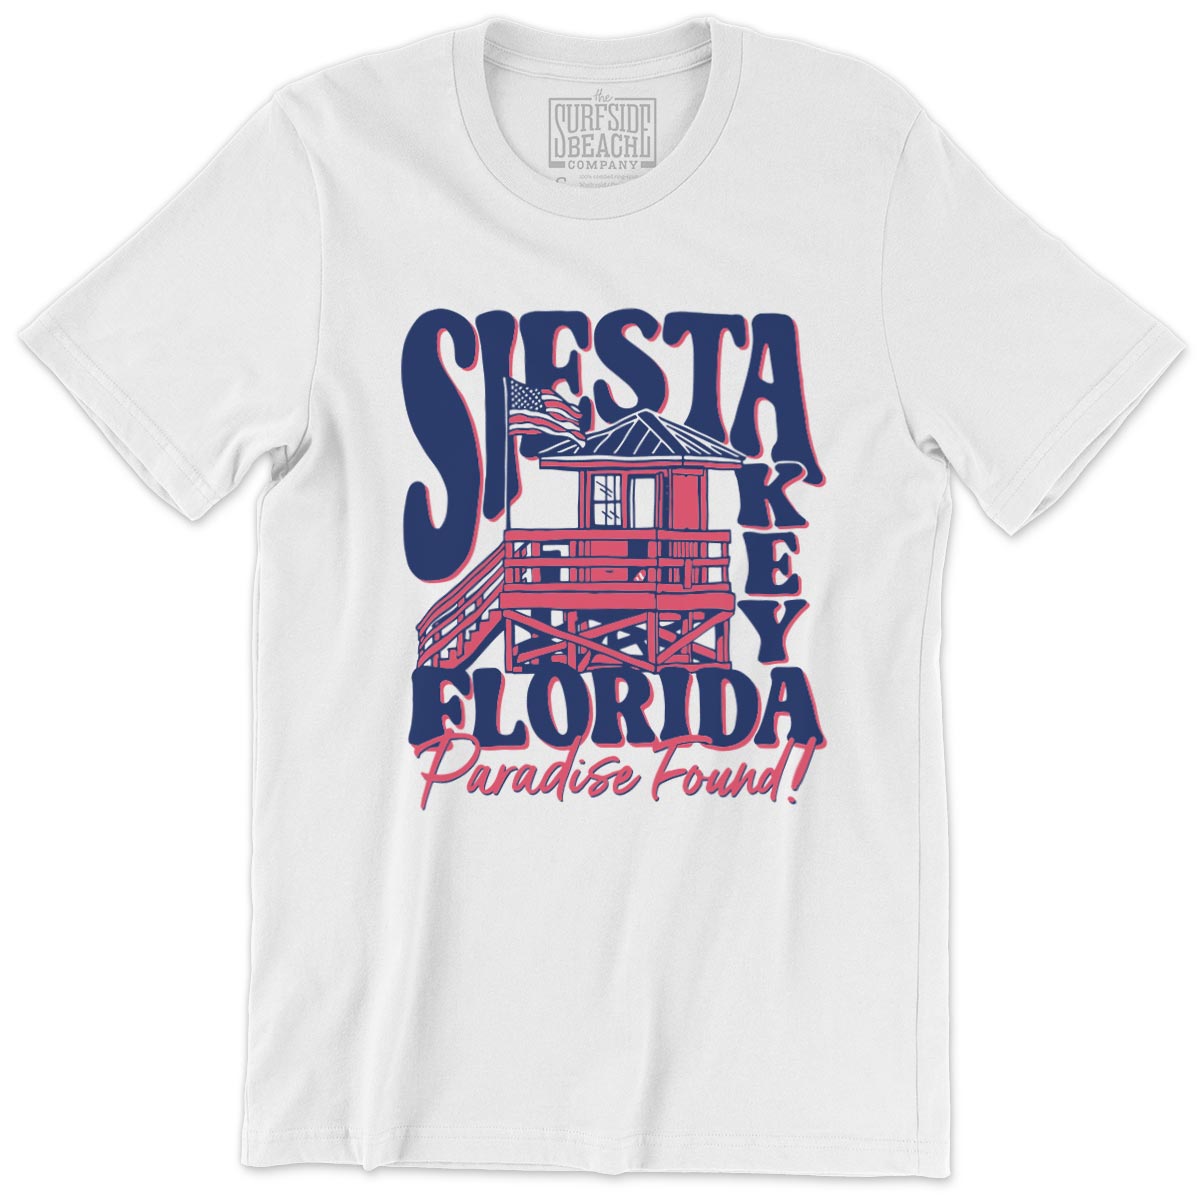 Siesta Key, Florida (Paradise Found) Unisex T-Shirt